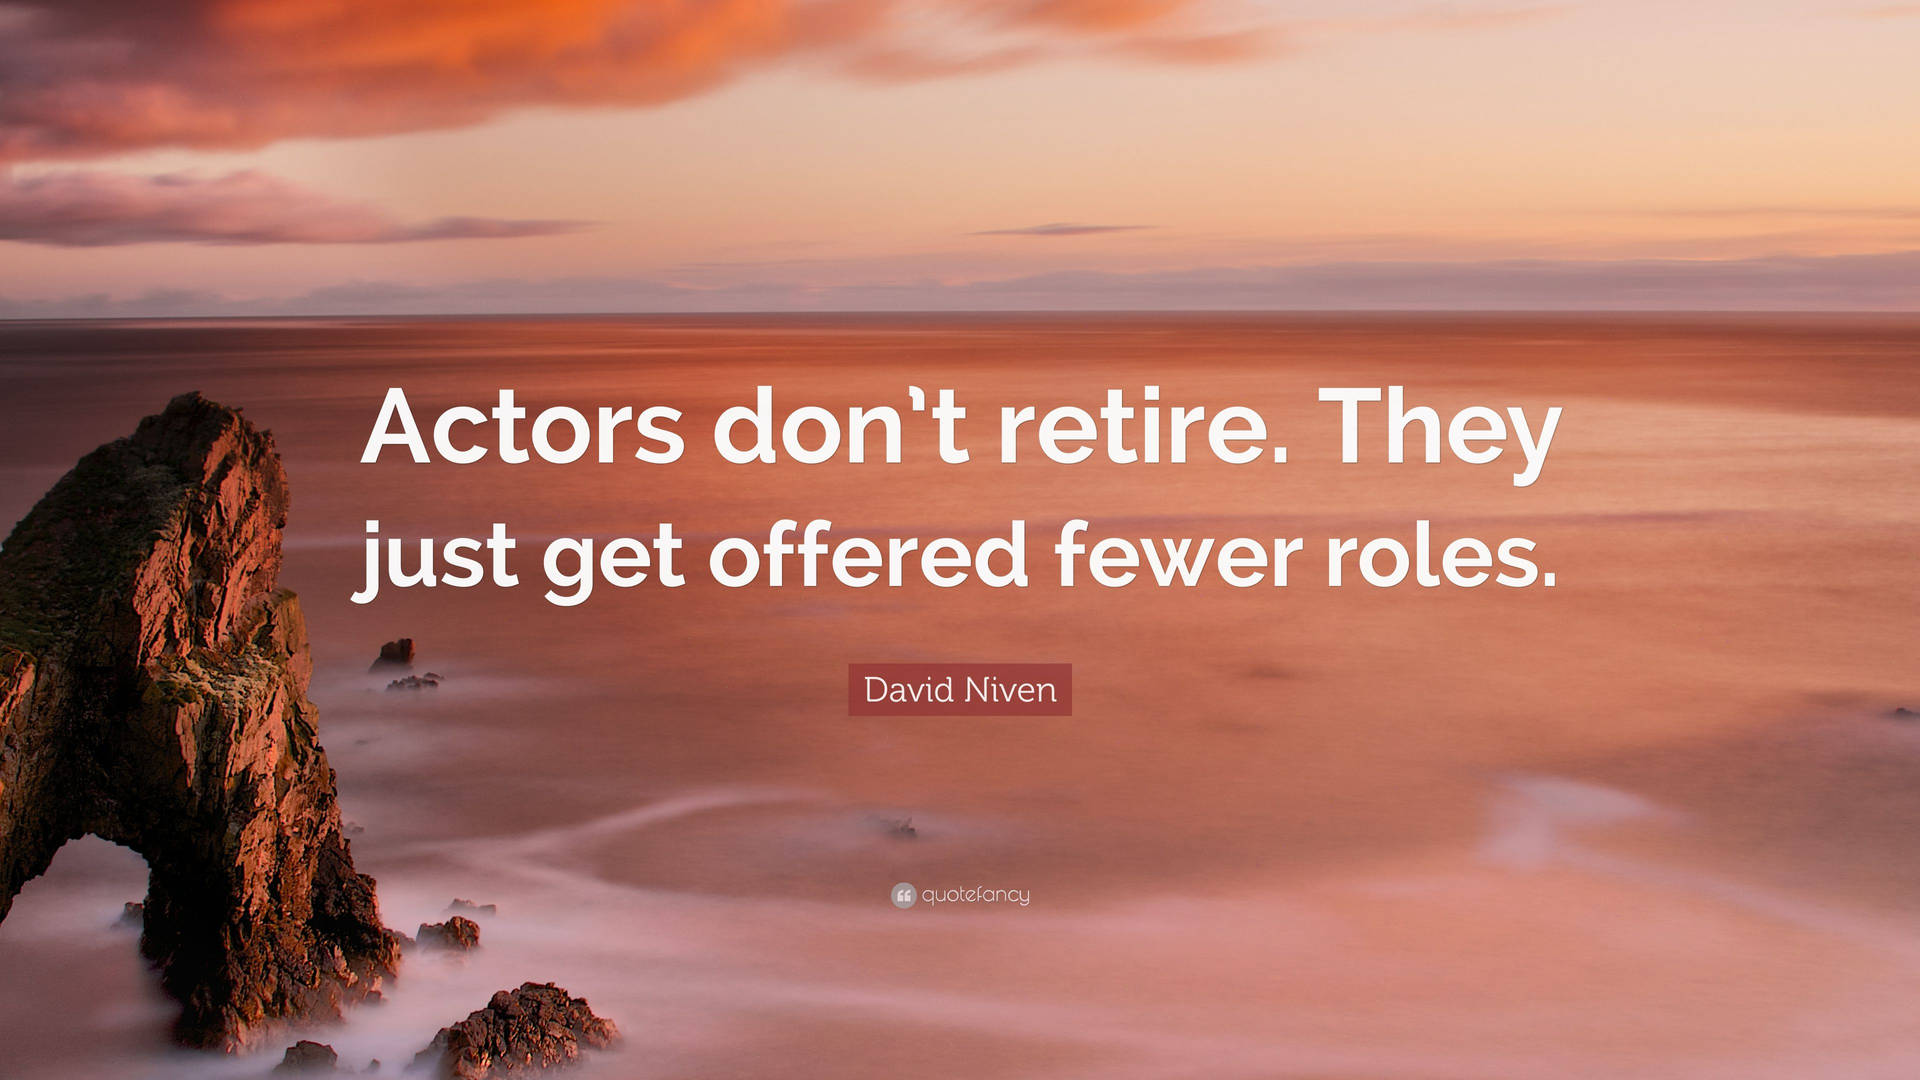 David Niven Actor Don't Retire Quote Wallpaper